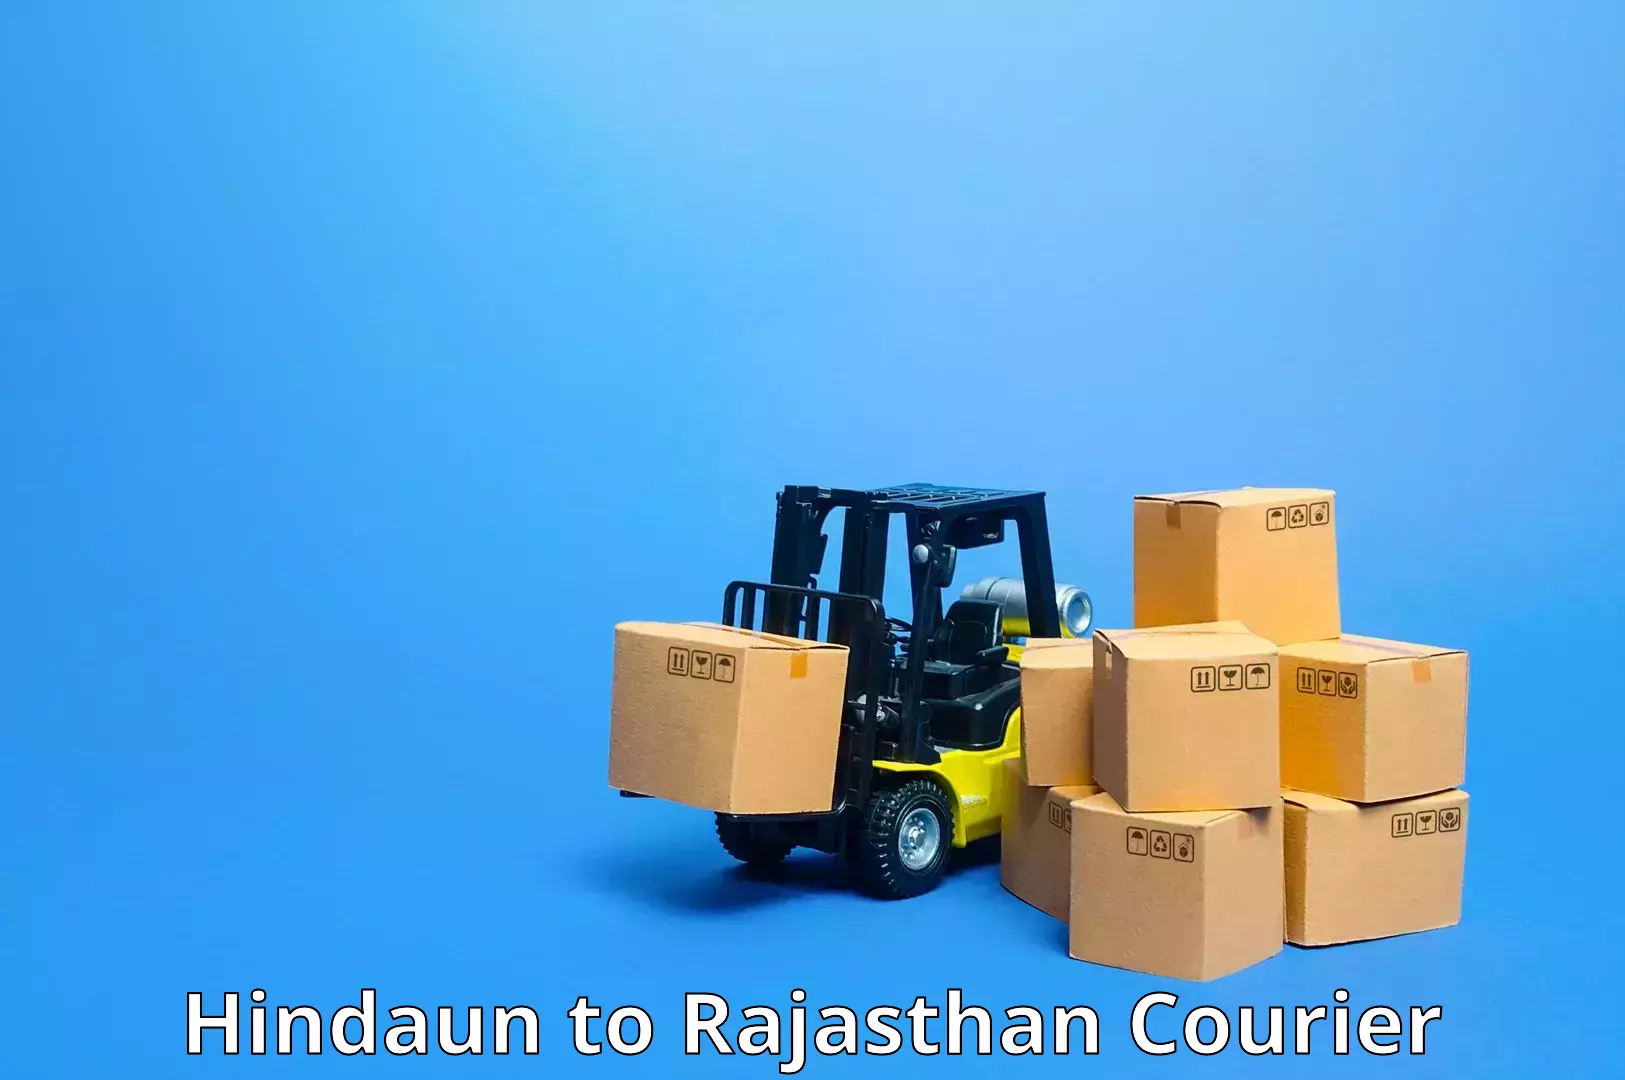 Express delivery capabilities Hindaun to Gogunda